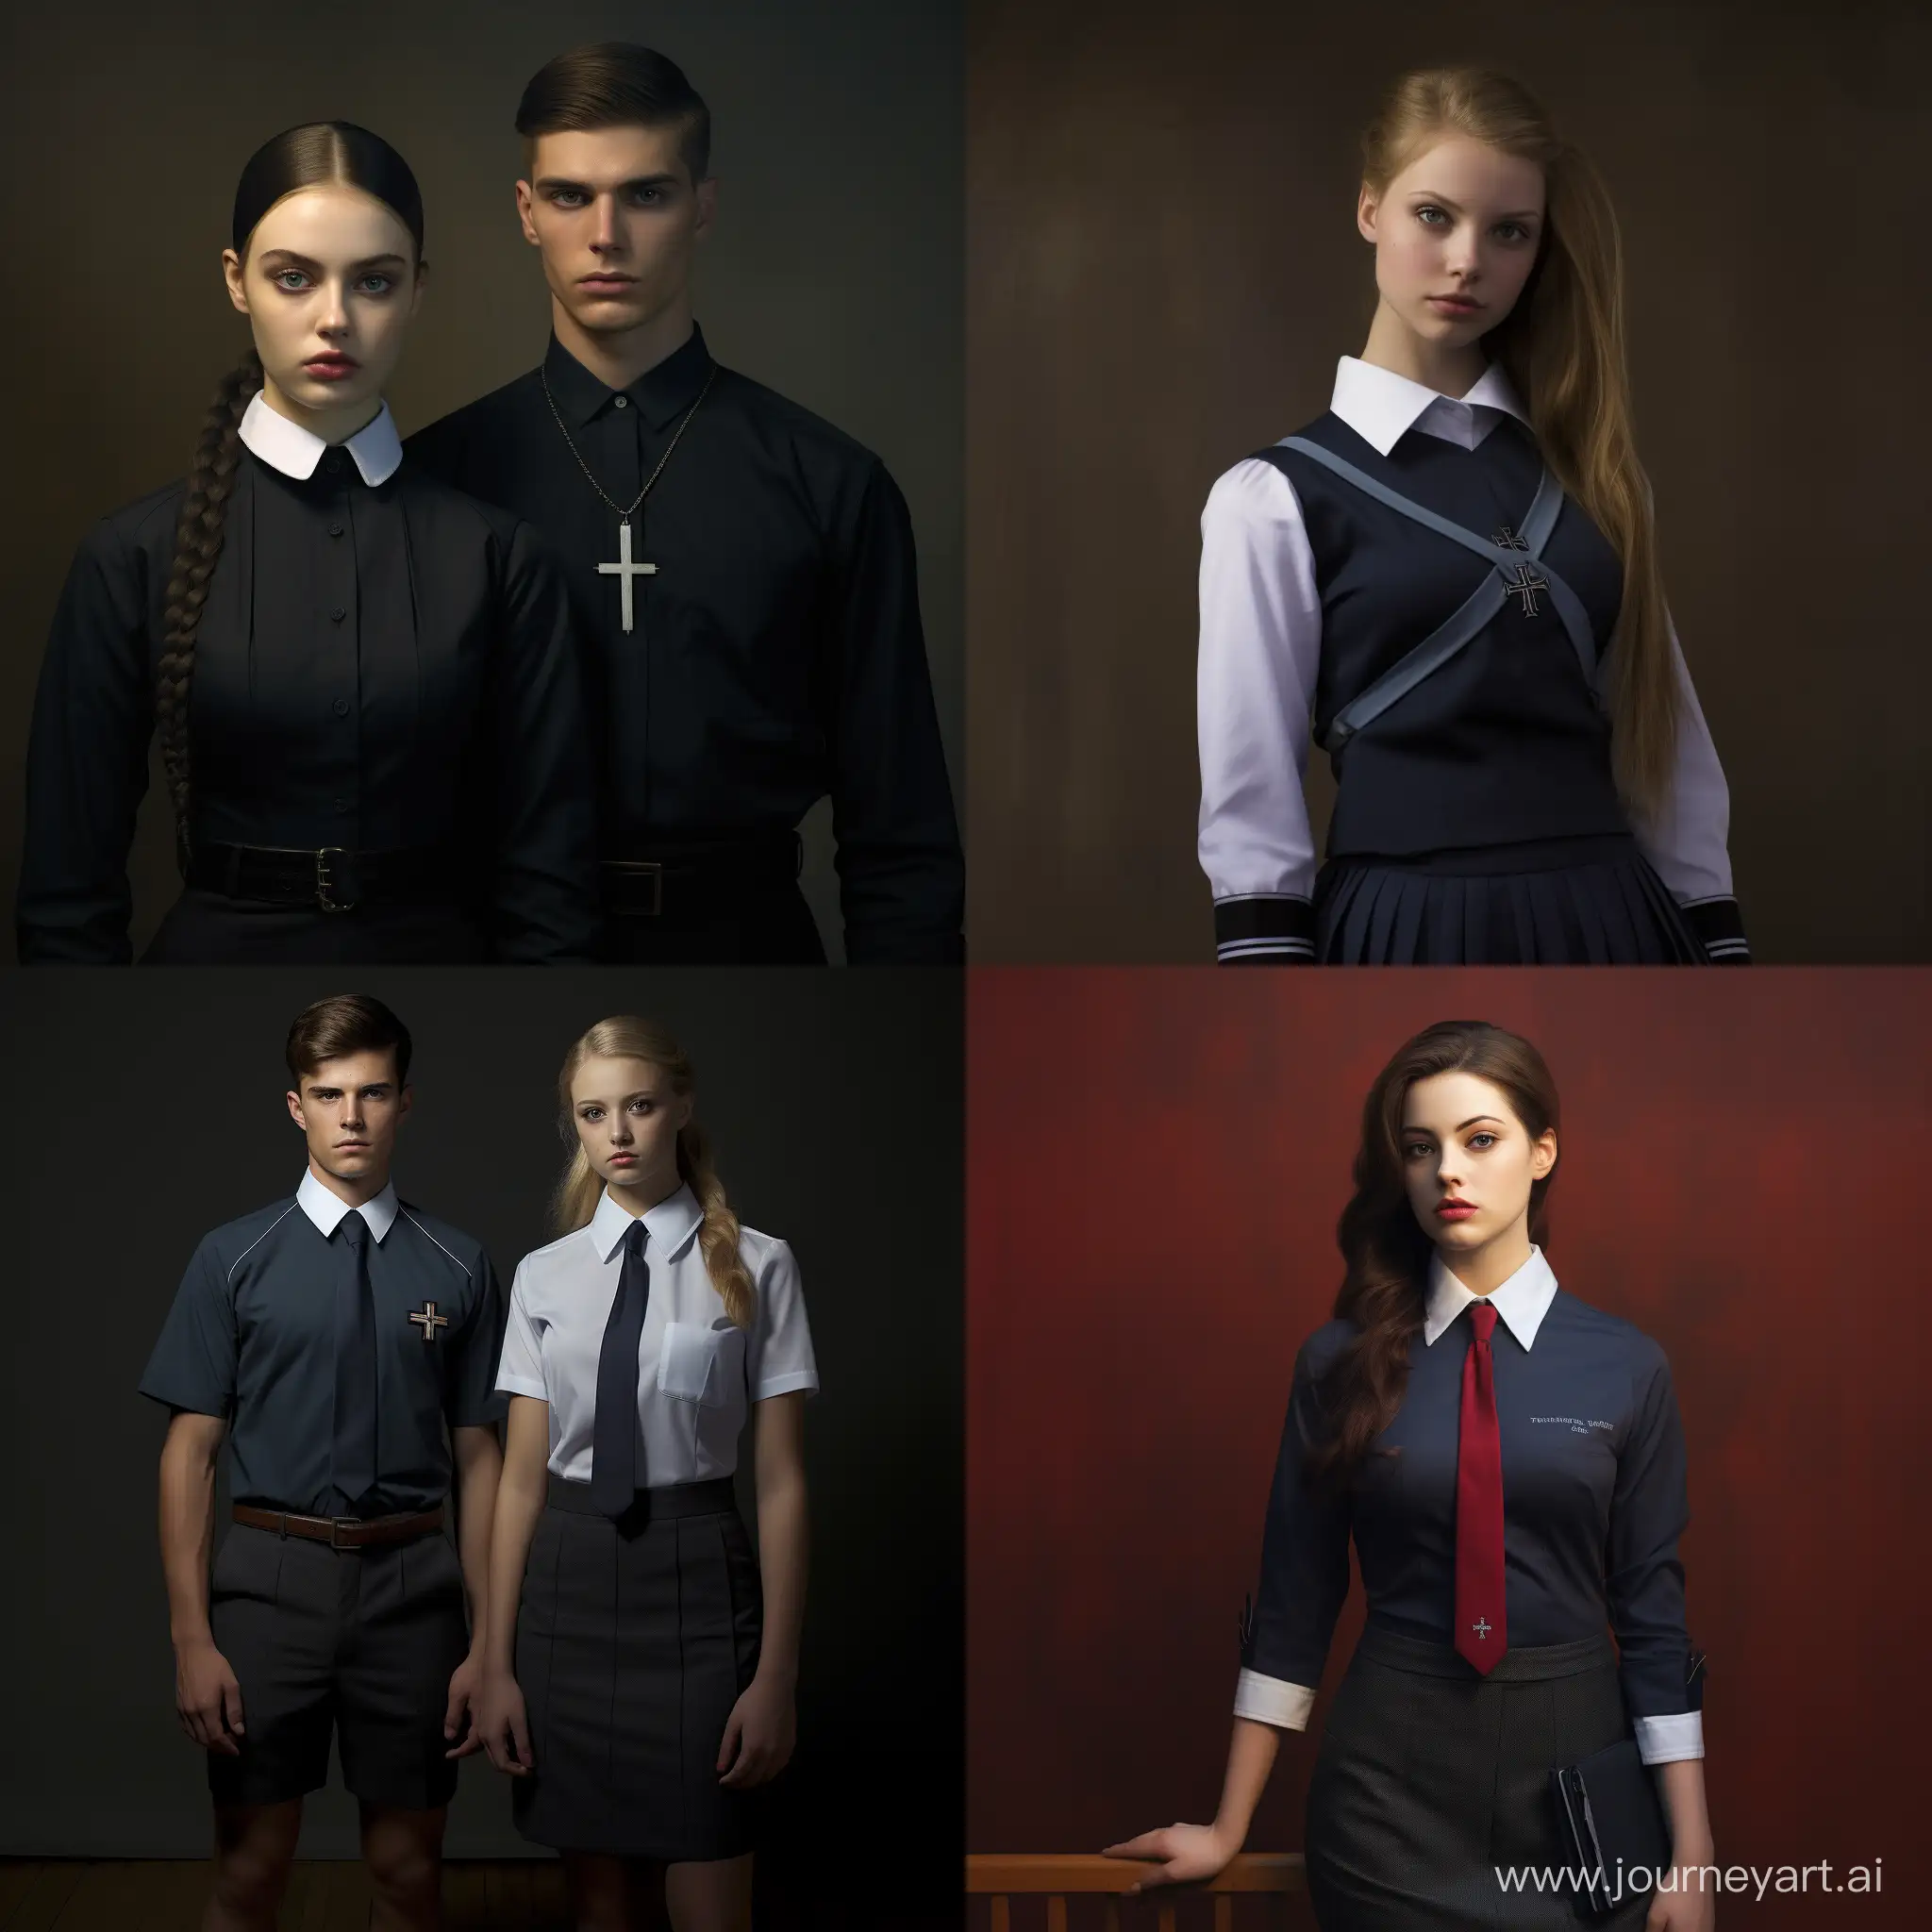 Christian uniform